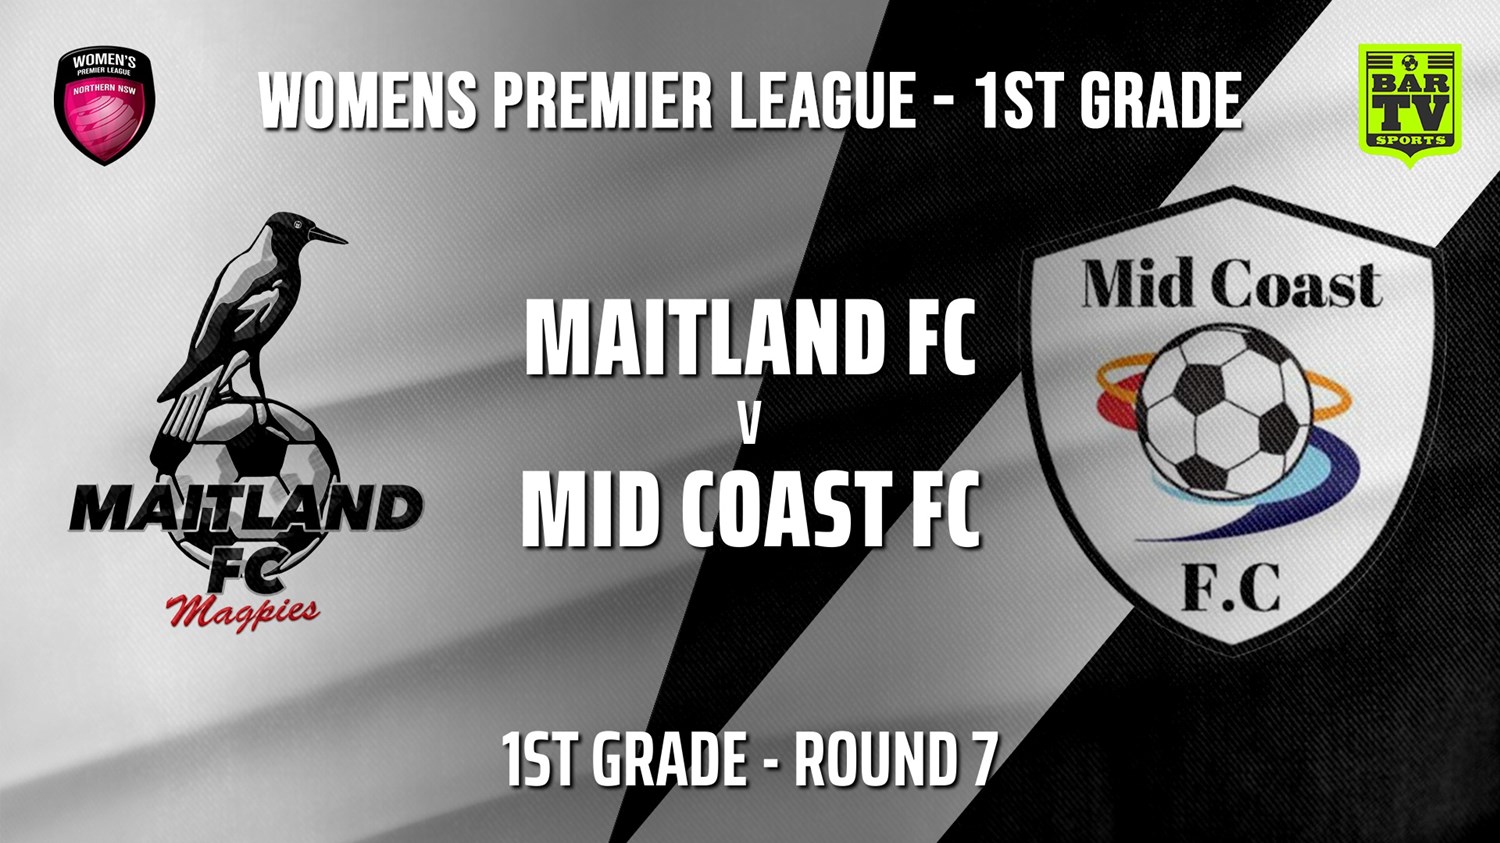 210516-Herald Women’s Premier League Round 7 - 1st Grade - Maitland FC (women) v Mid Coast FC (women) Minigame Slate Image